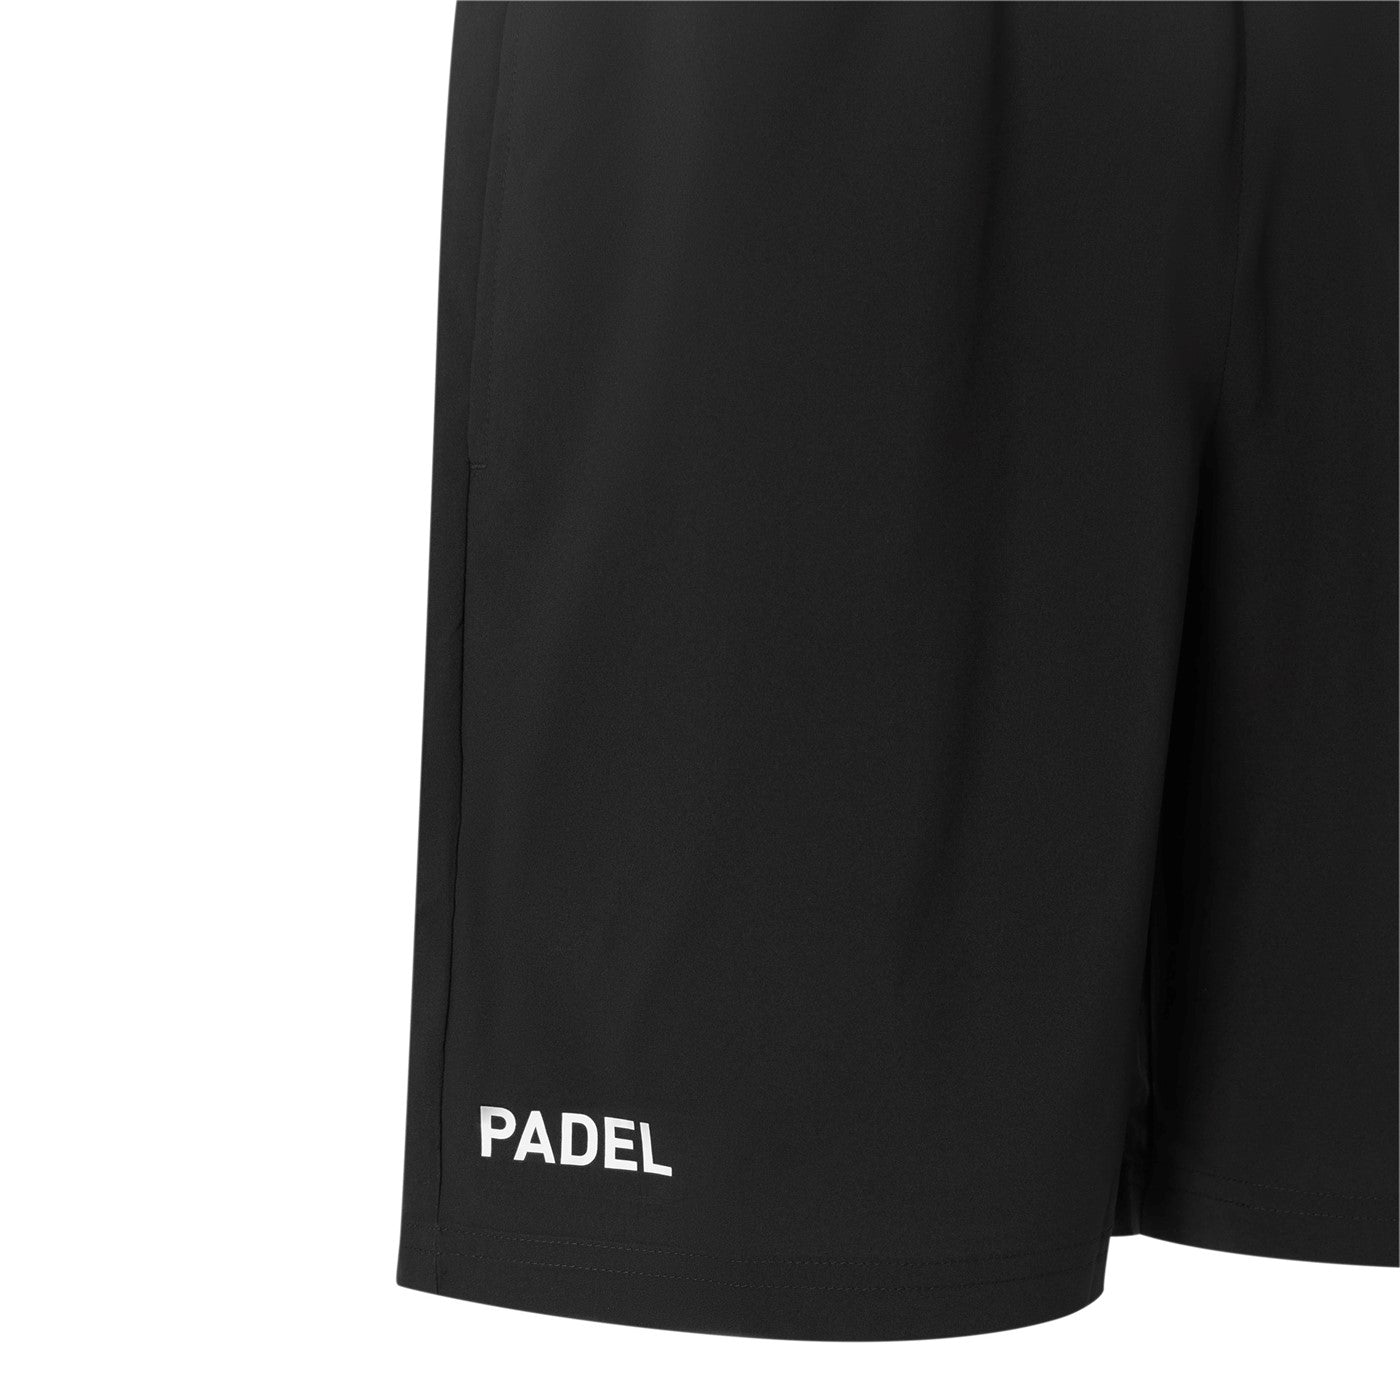 Puma men&#39;s sports shorts for Padel teamLIGA Short 931434 03 black